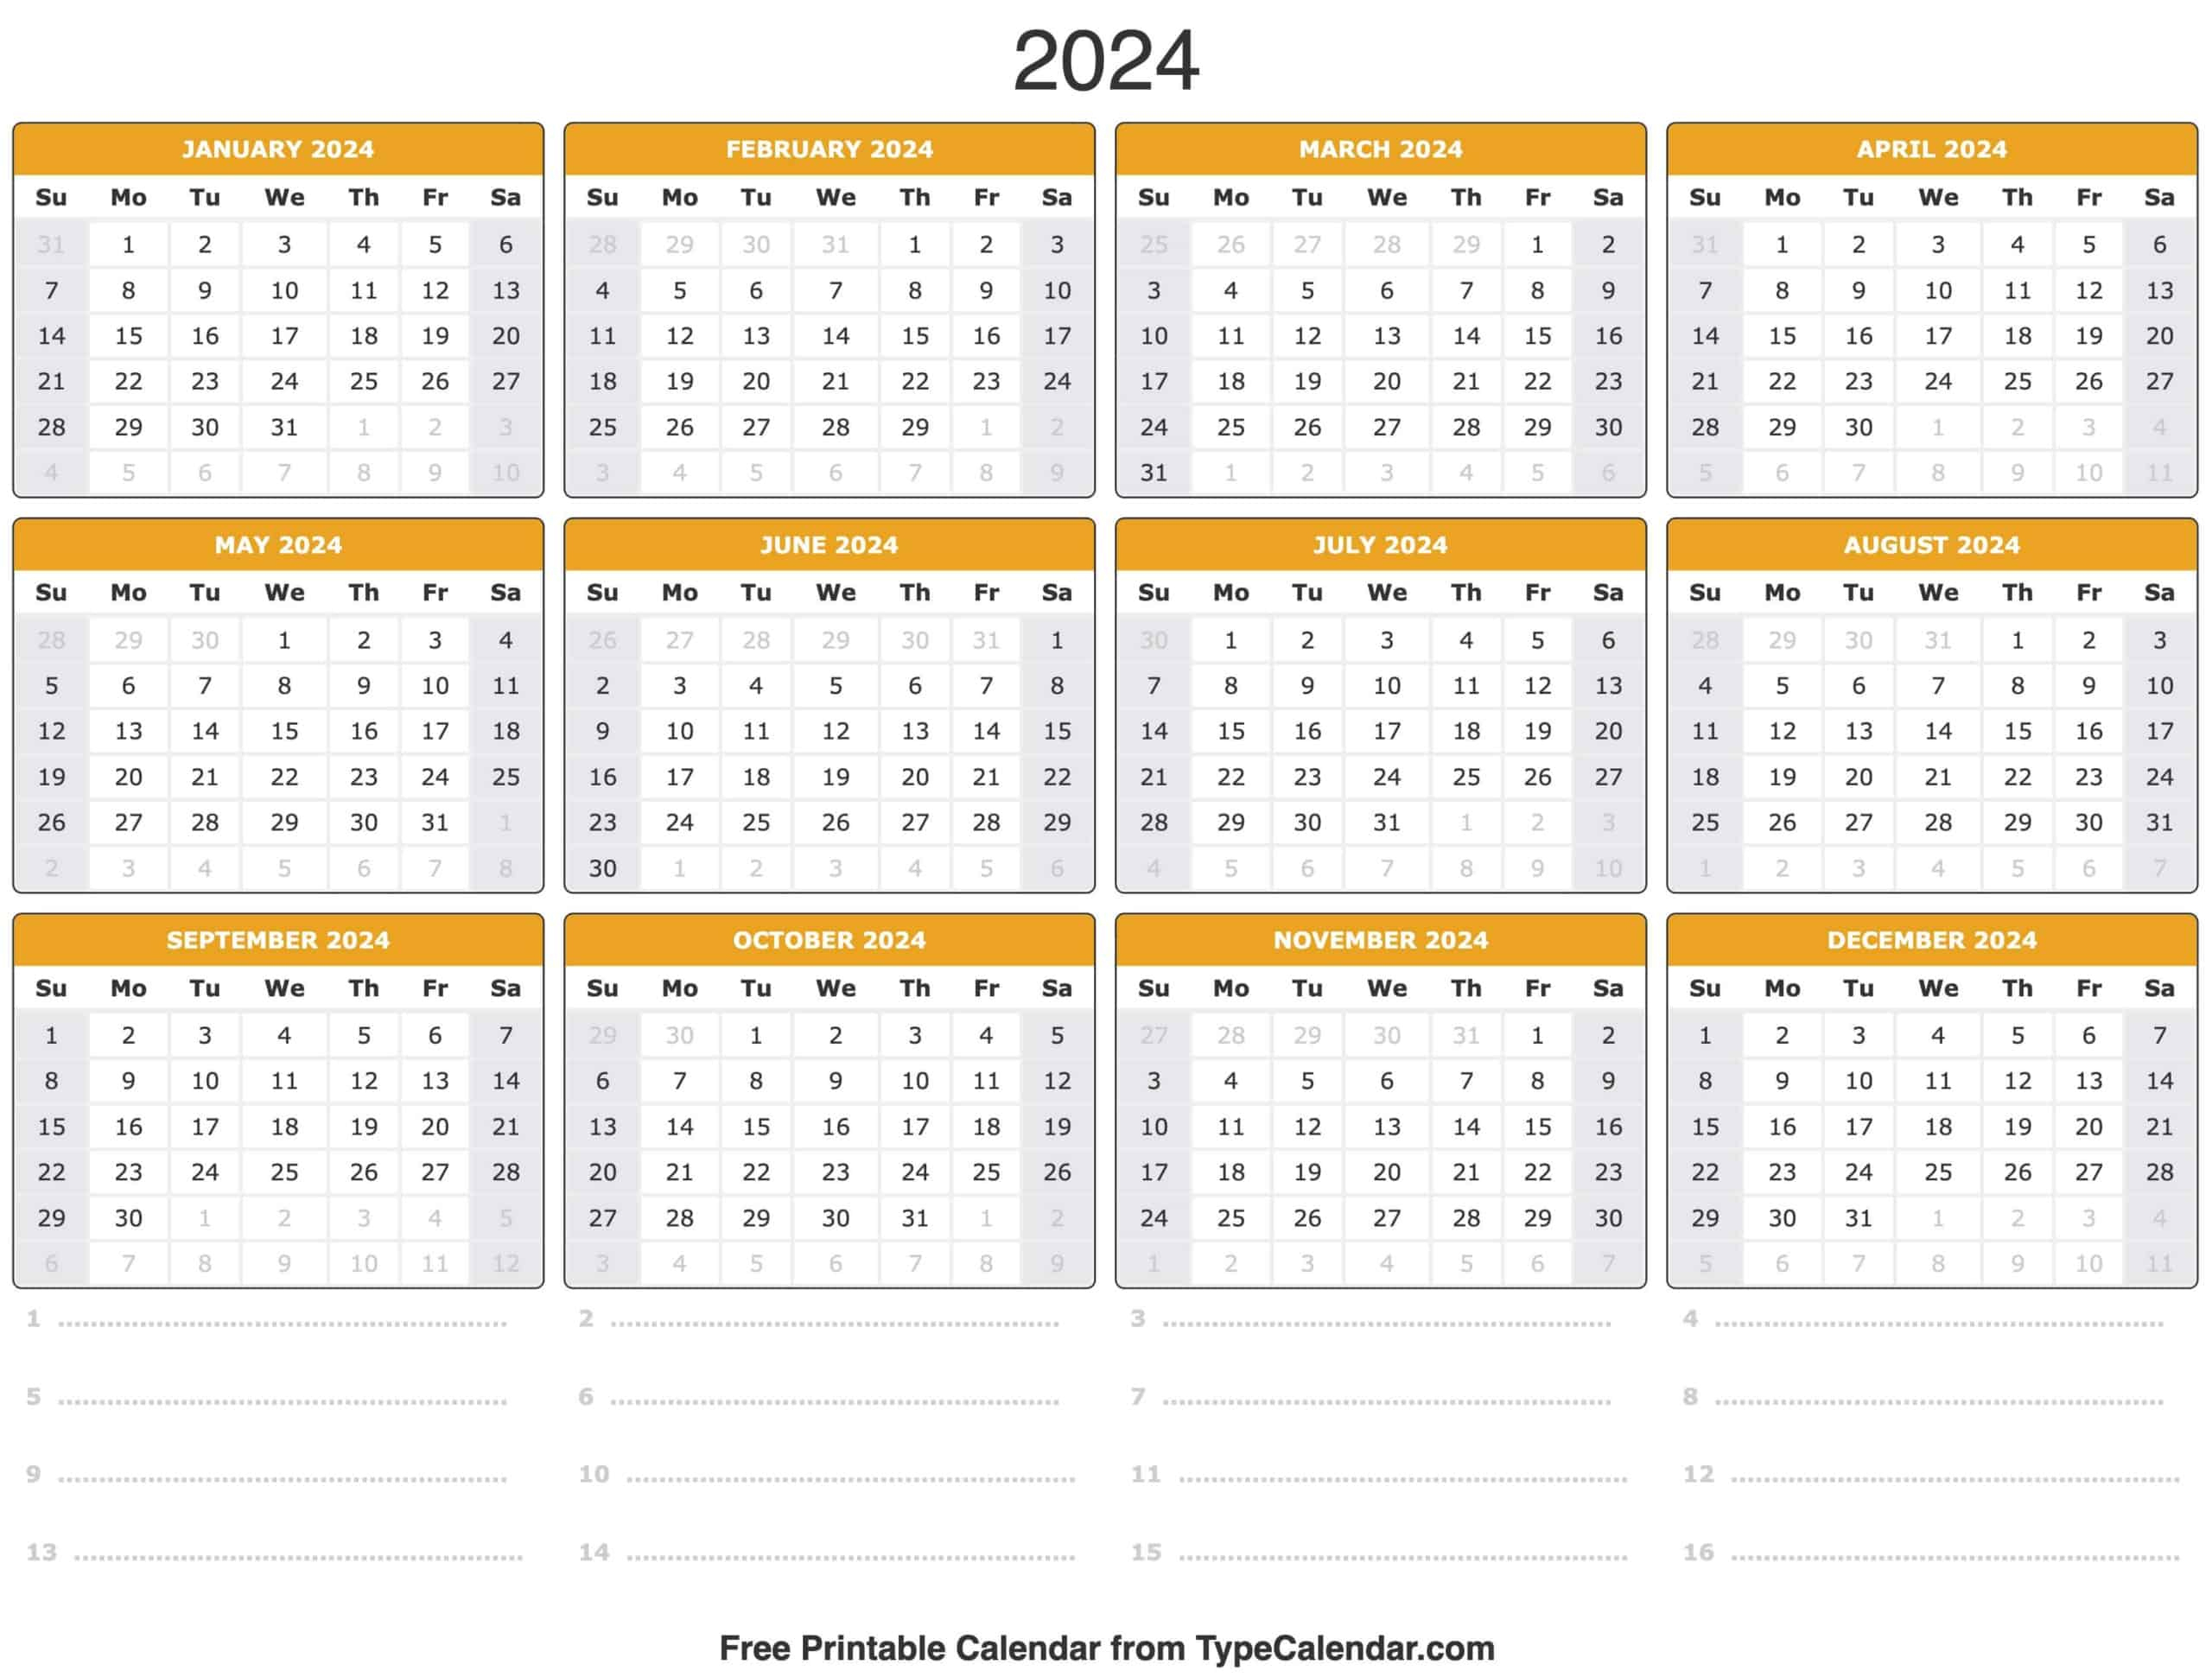 2024 Calendar: Free Printable Calendar With Holidays | 2024 Annual Calendar Google Sheets